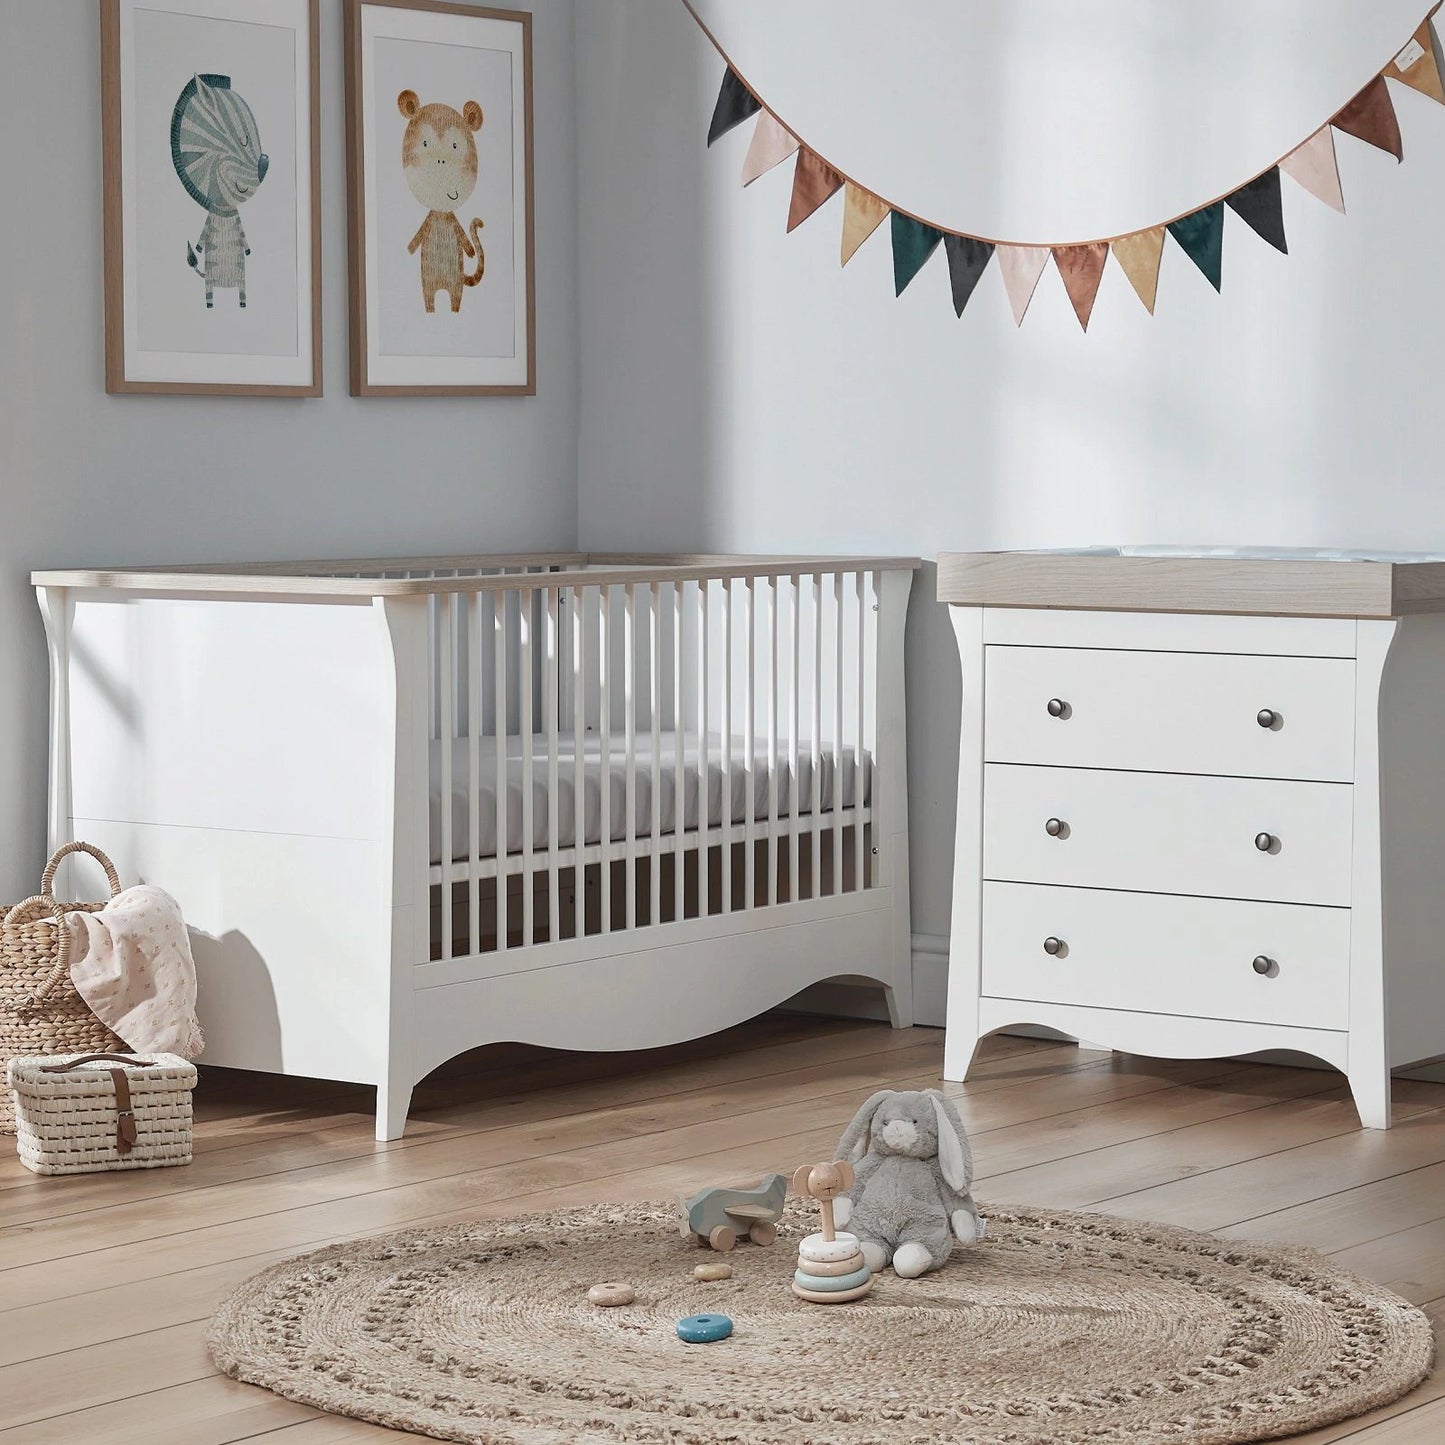 Cuddle Co Clara 2 Piece Nursery Furniture Set (Cot Bed & Dresser) - White & Ash